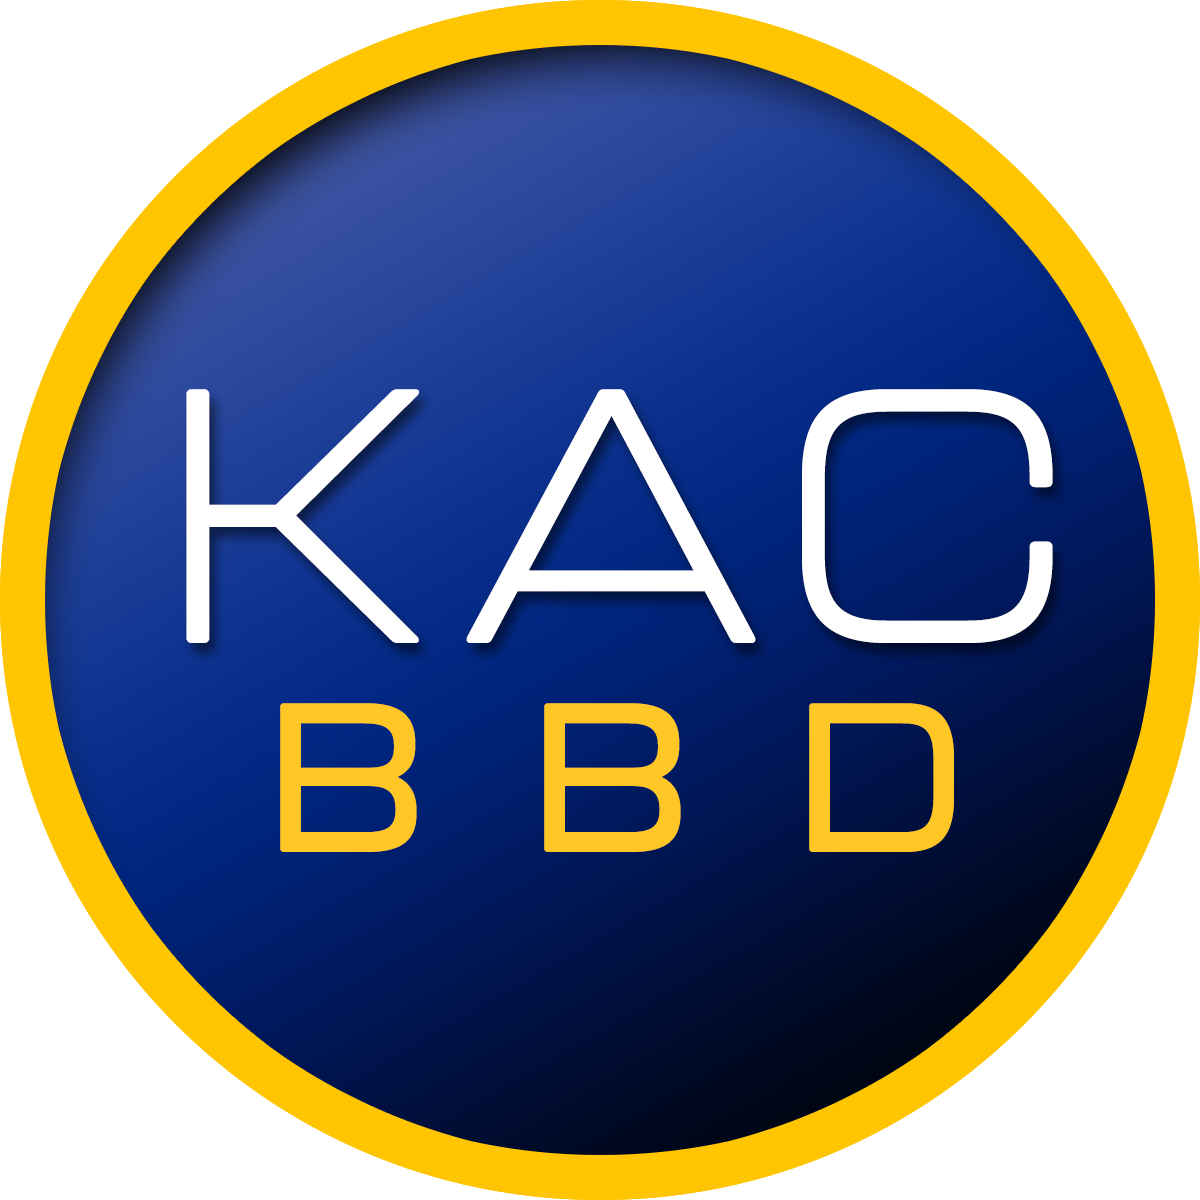 kac_bbd-insta-profile-logo-circle-1200 copy.png